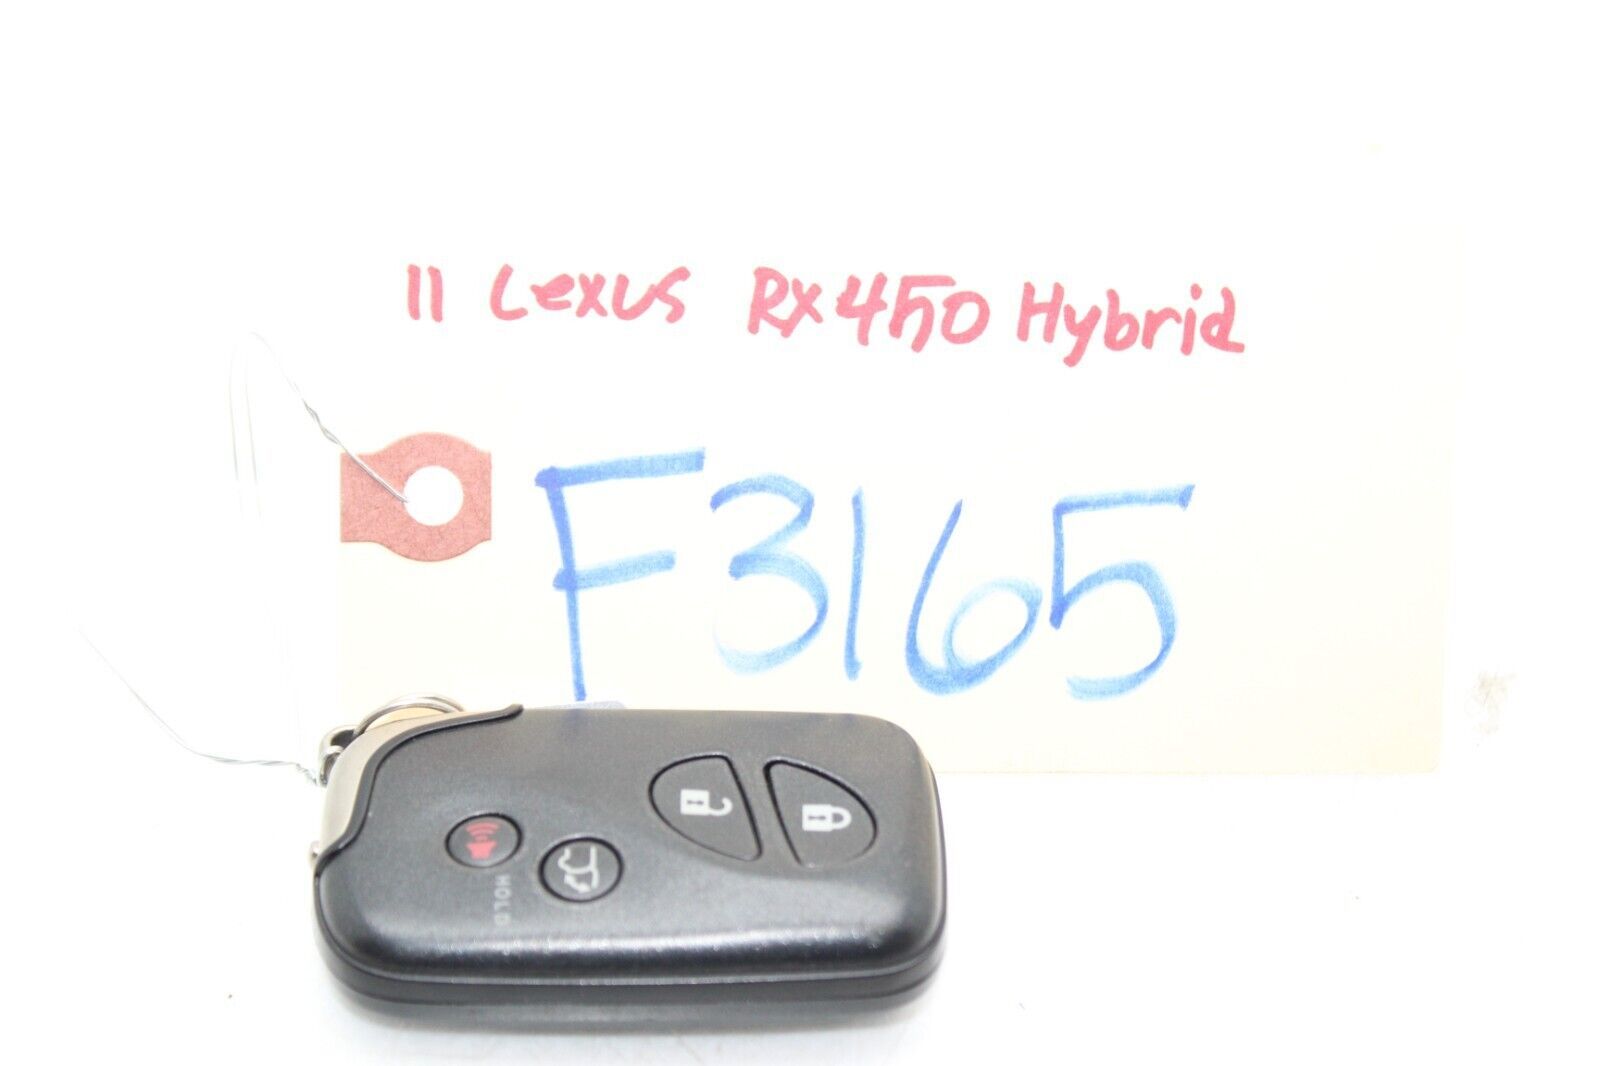 Primary image for 10-15 LEXUS RX450 HYBRID Key FOB F3165